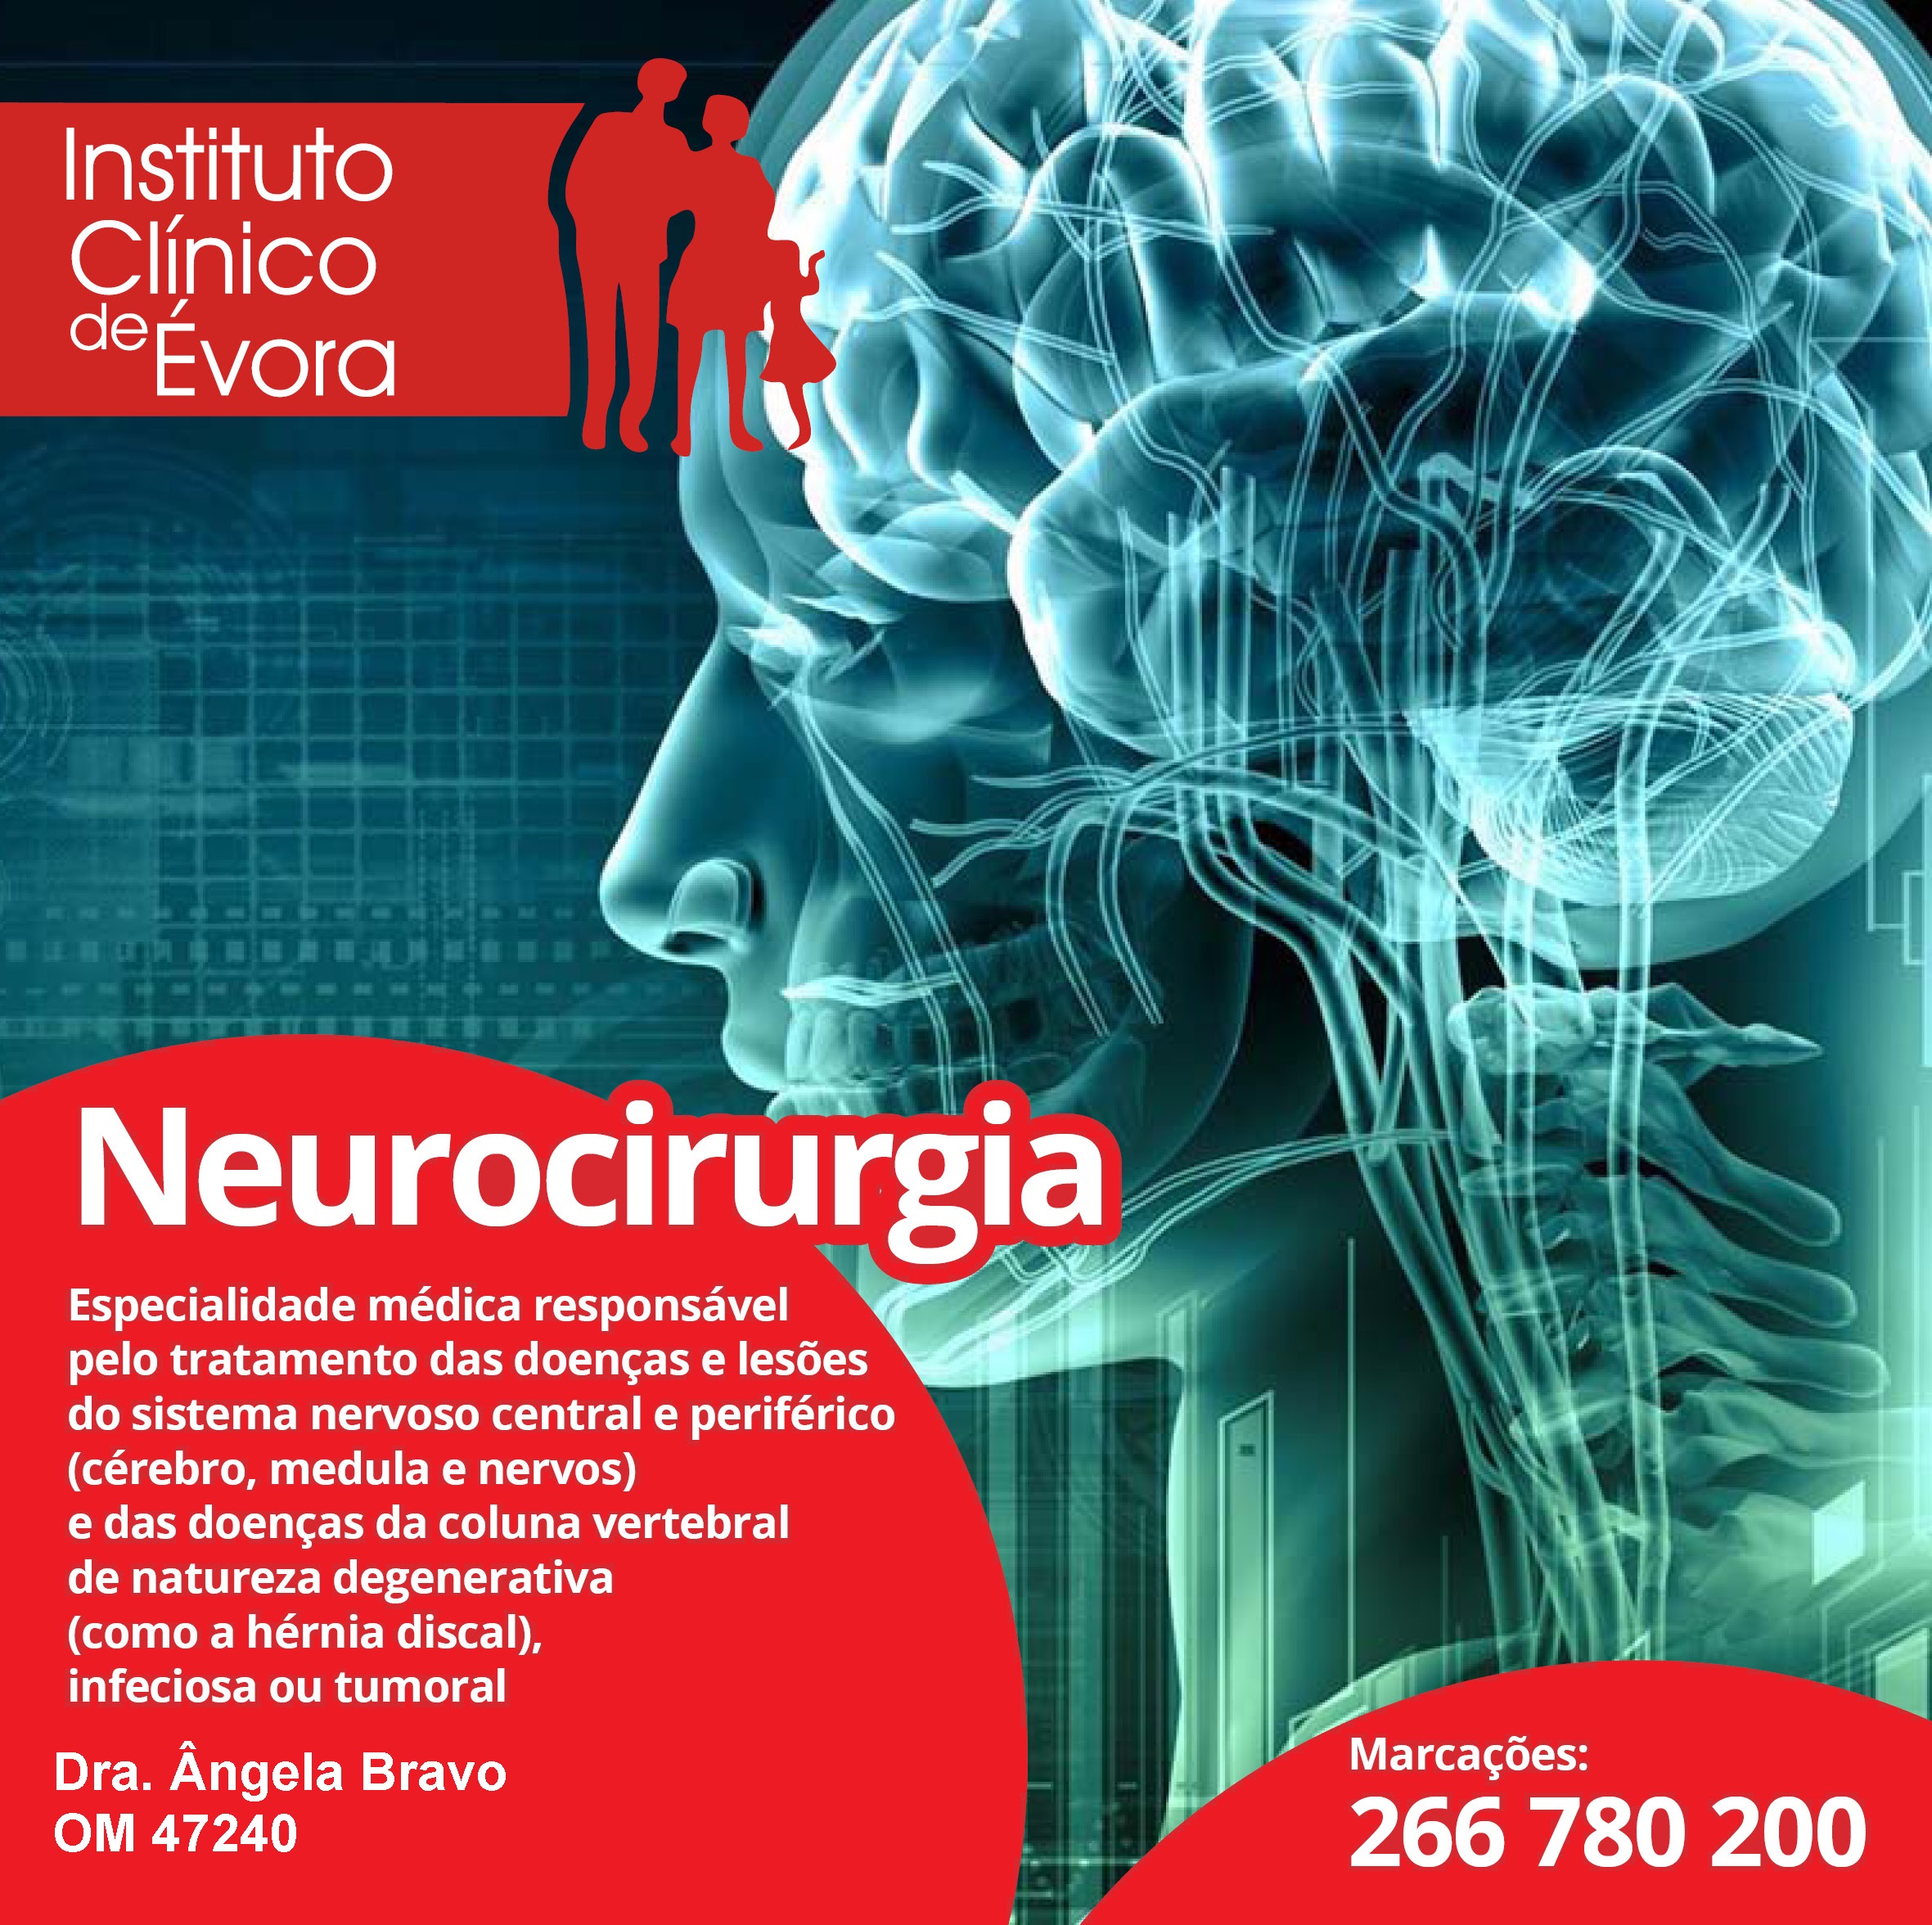 Neurocirurgia